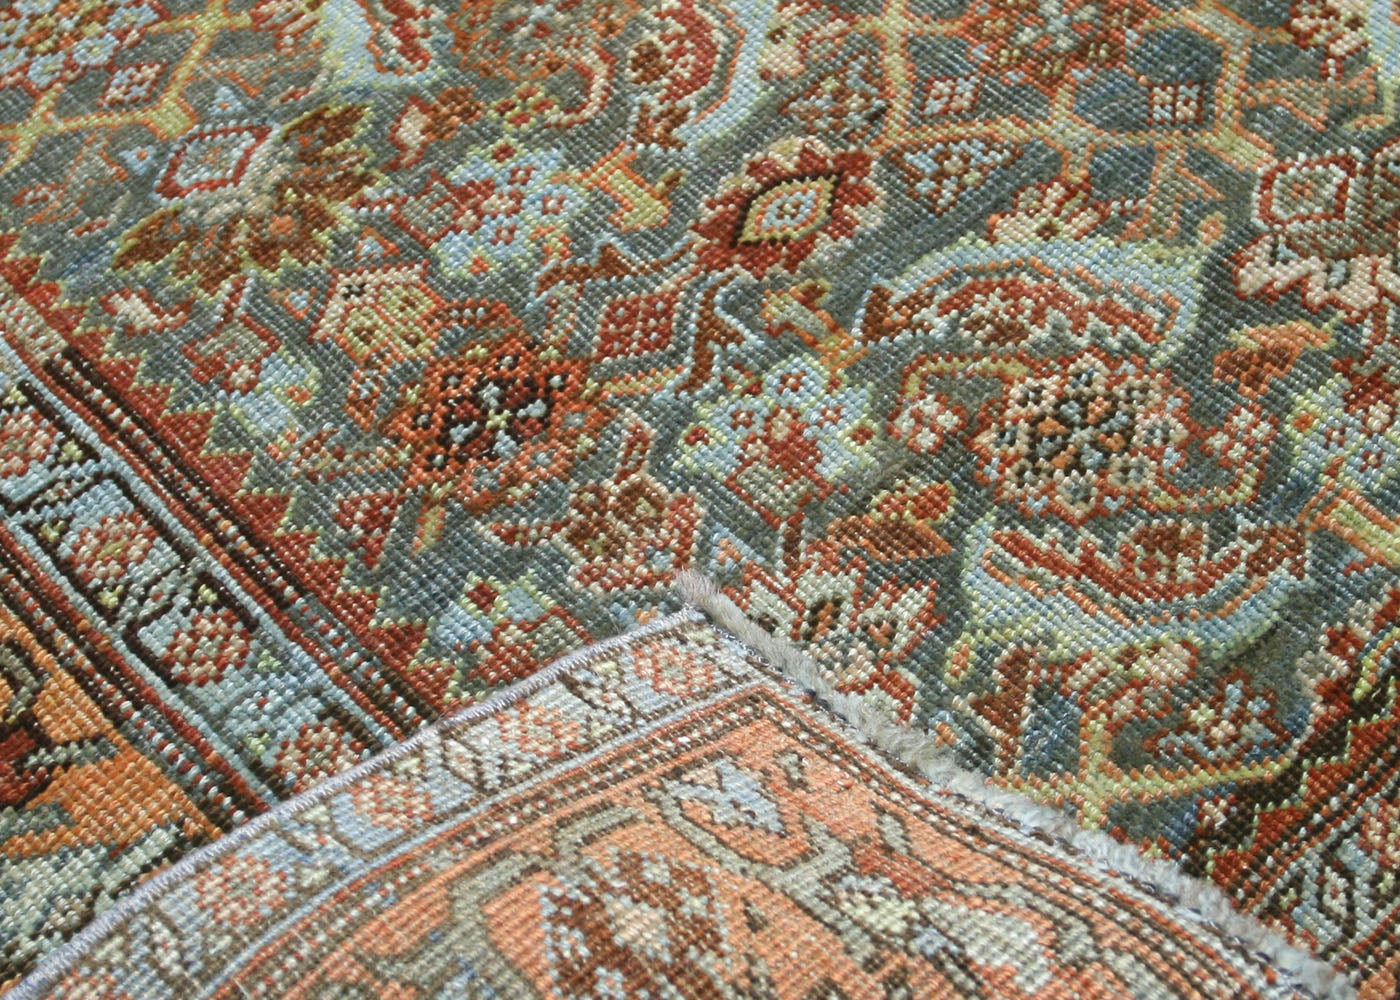 Antique Persian Bidjar Runner - 3'9" x 15'